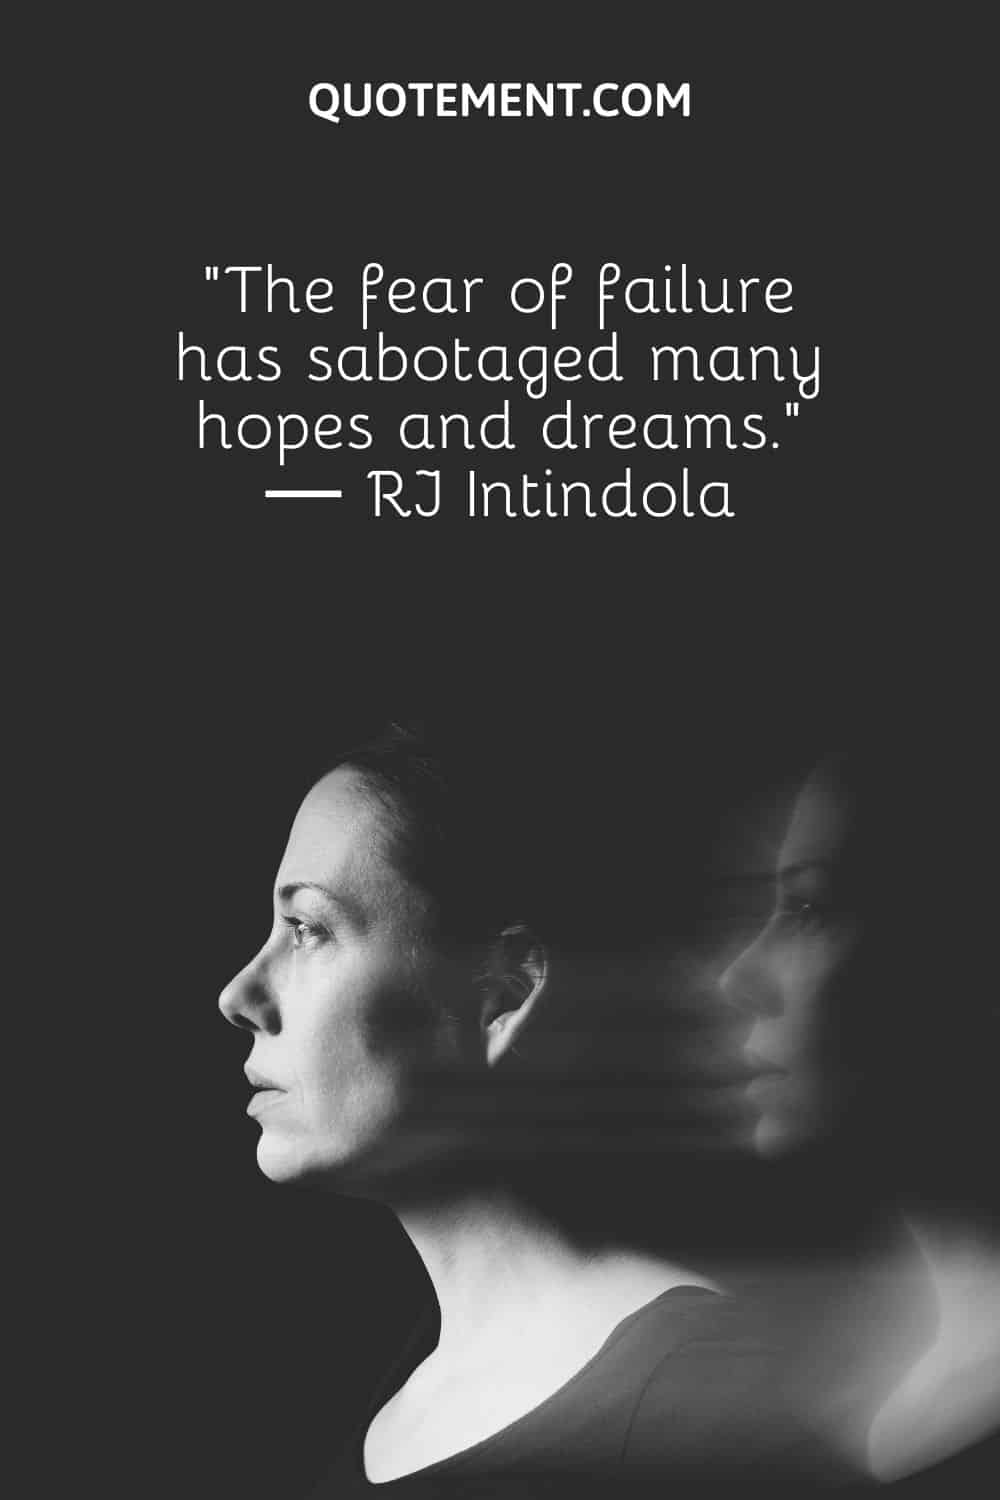 “The fear of failure has sabotaged many hopes and dreams.” ― RJ Intindola